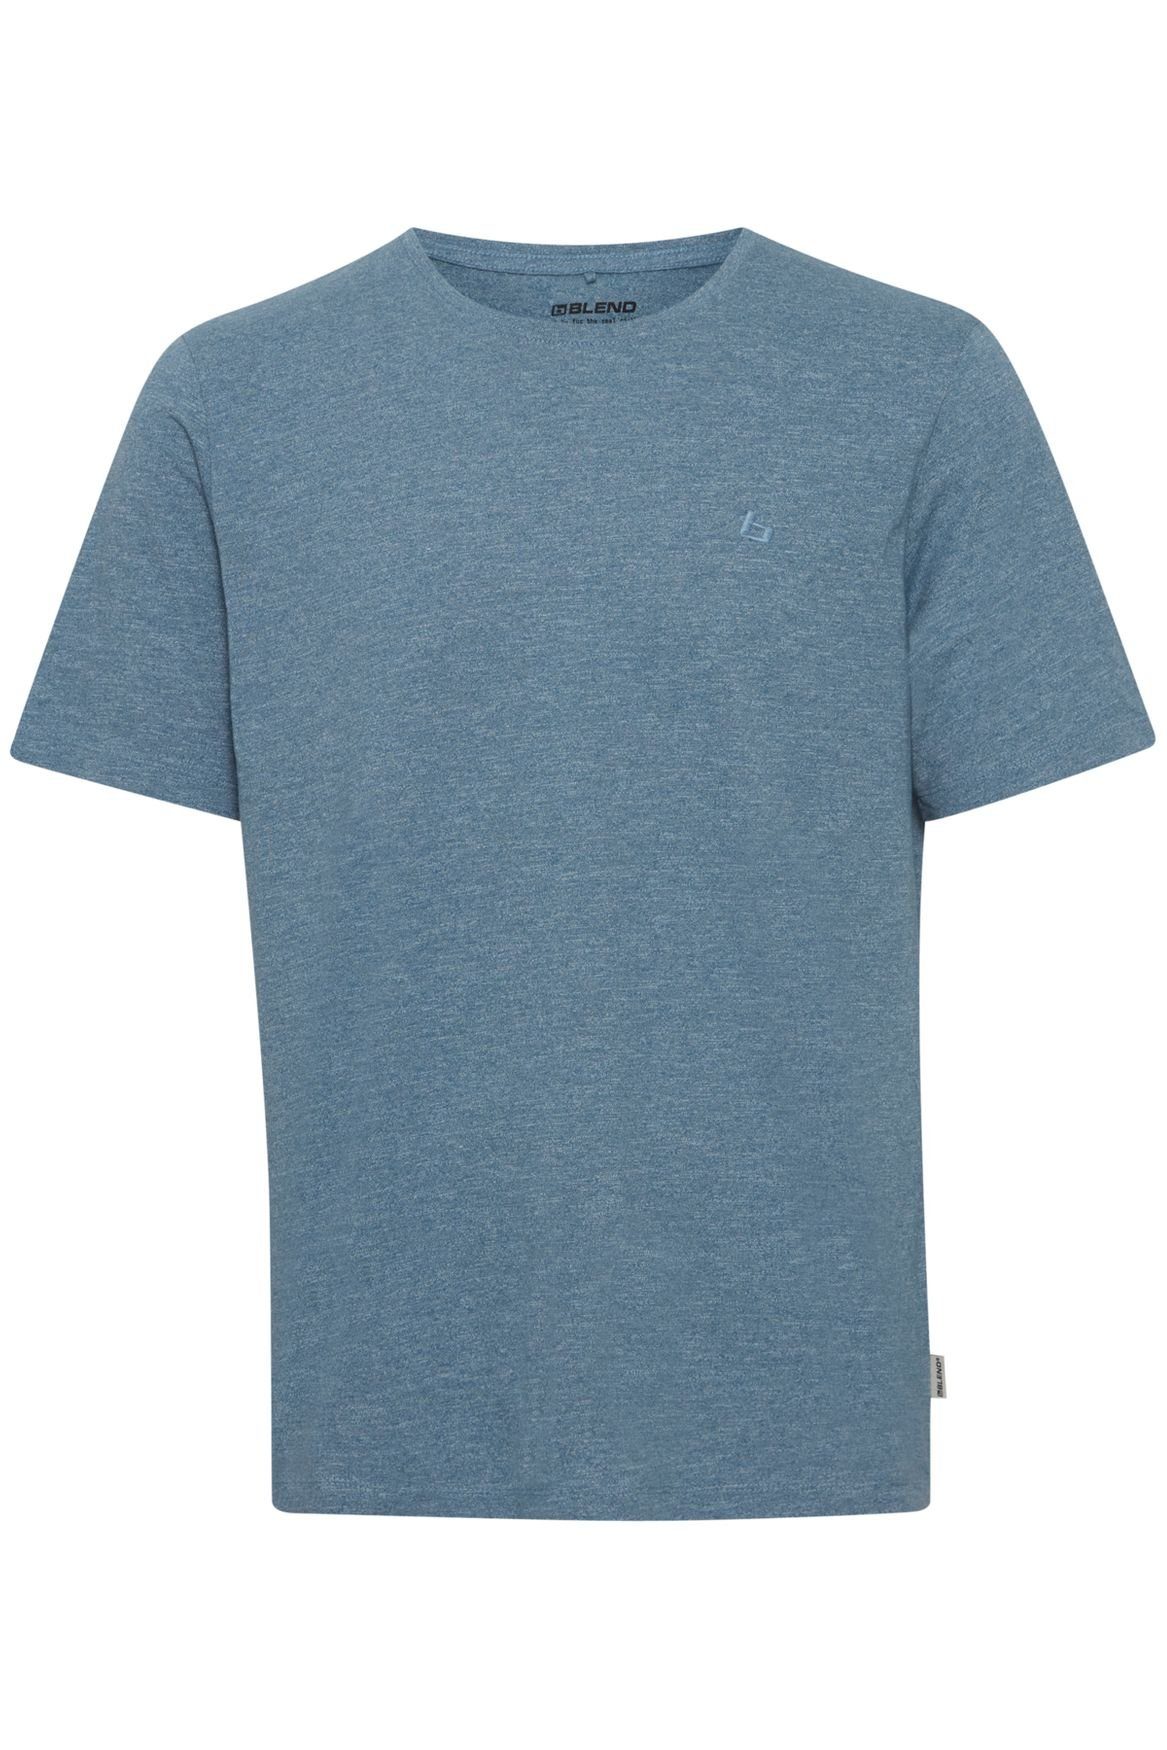 Blend T-Shirt Rundhals T-Shirt Kurzarm Stretch Shirt BHWilton 5030 in Blau | 